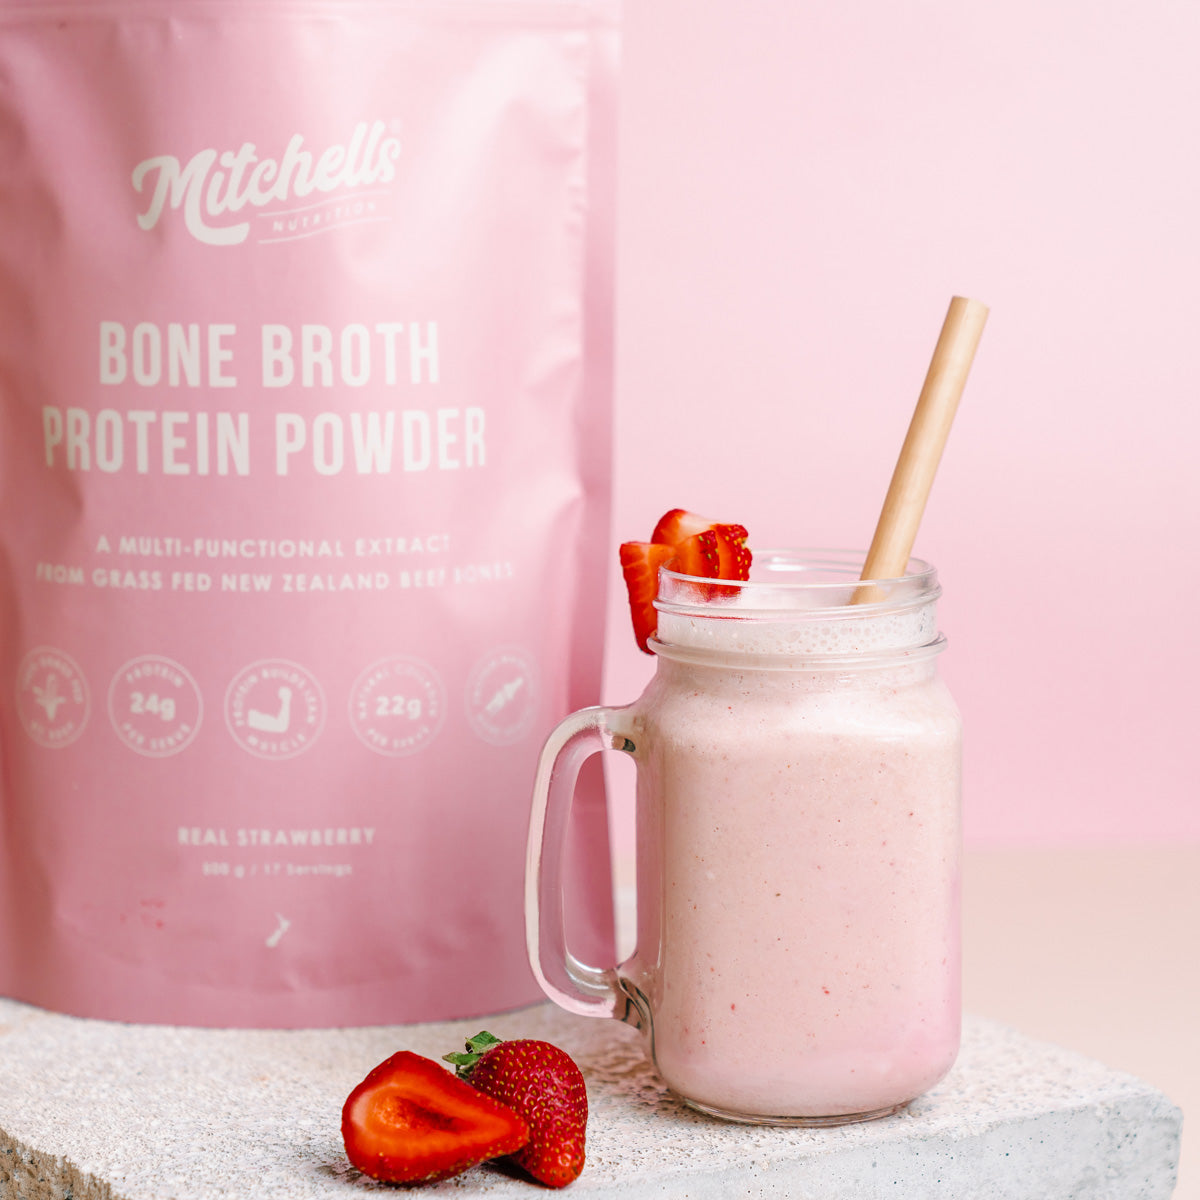 Mitchells Nutrition Bone Broth Protein Powder - Real Strawberry